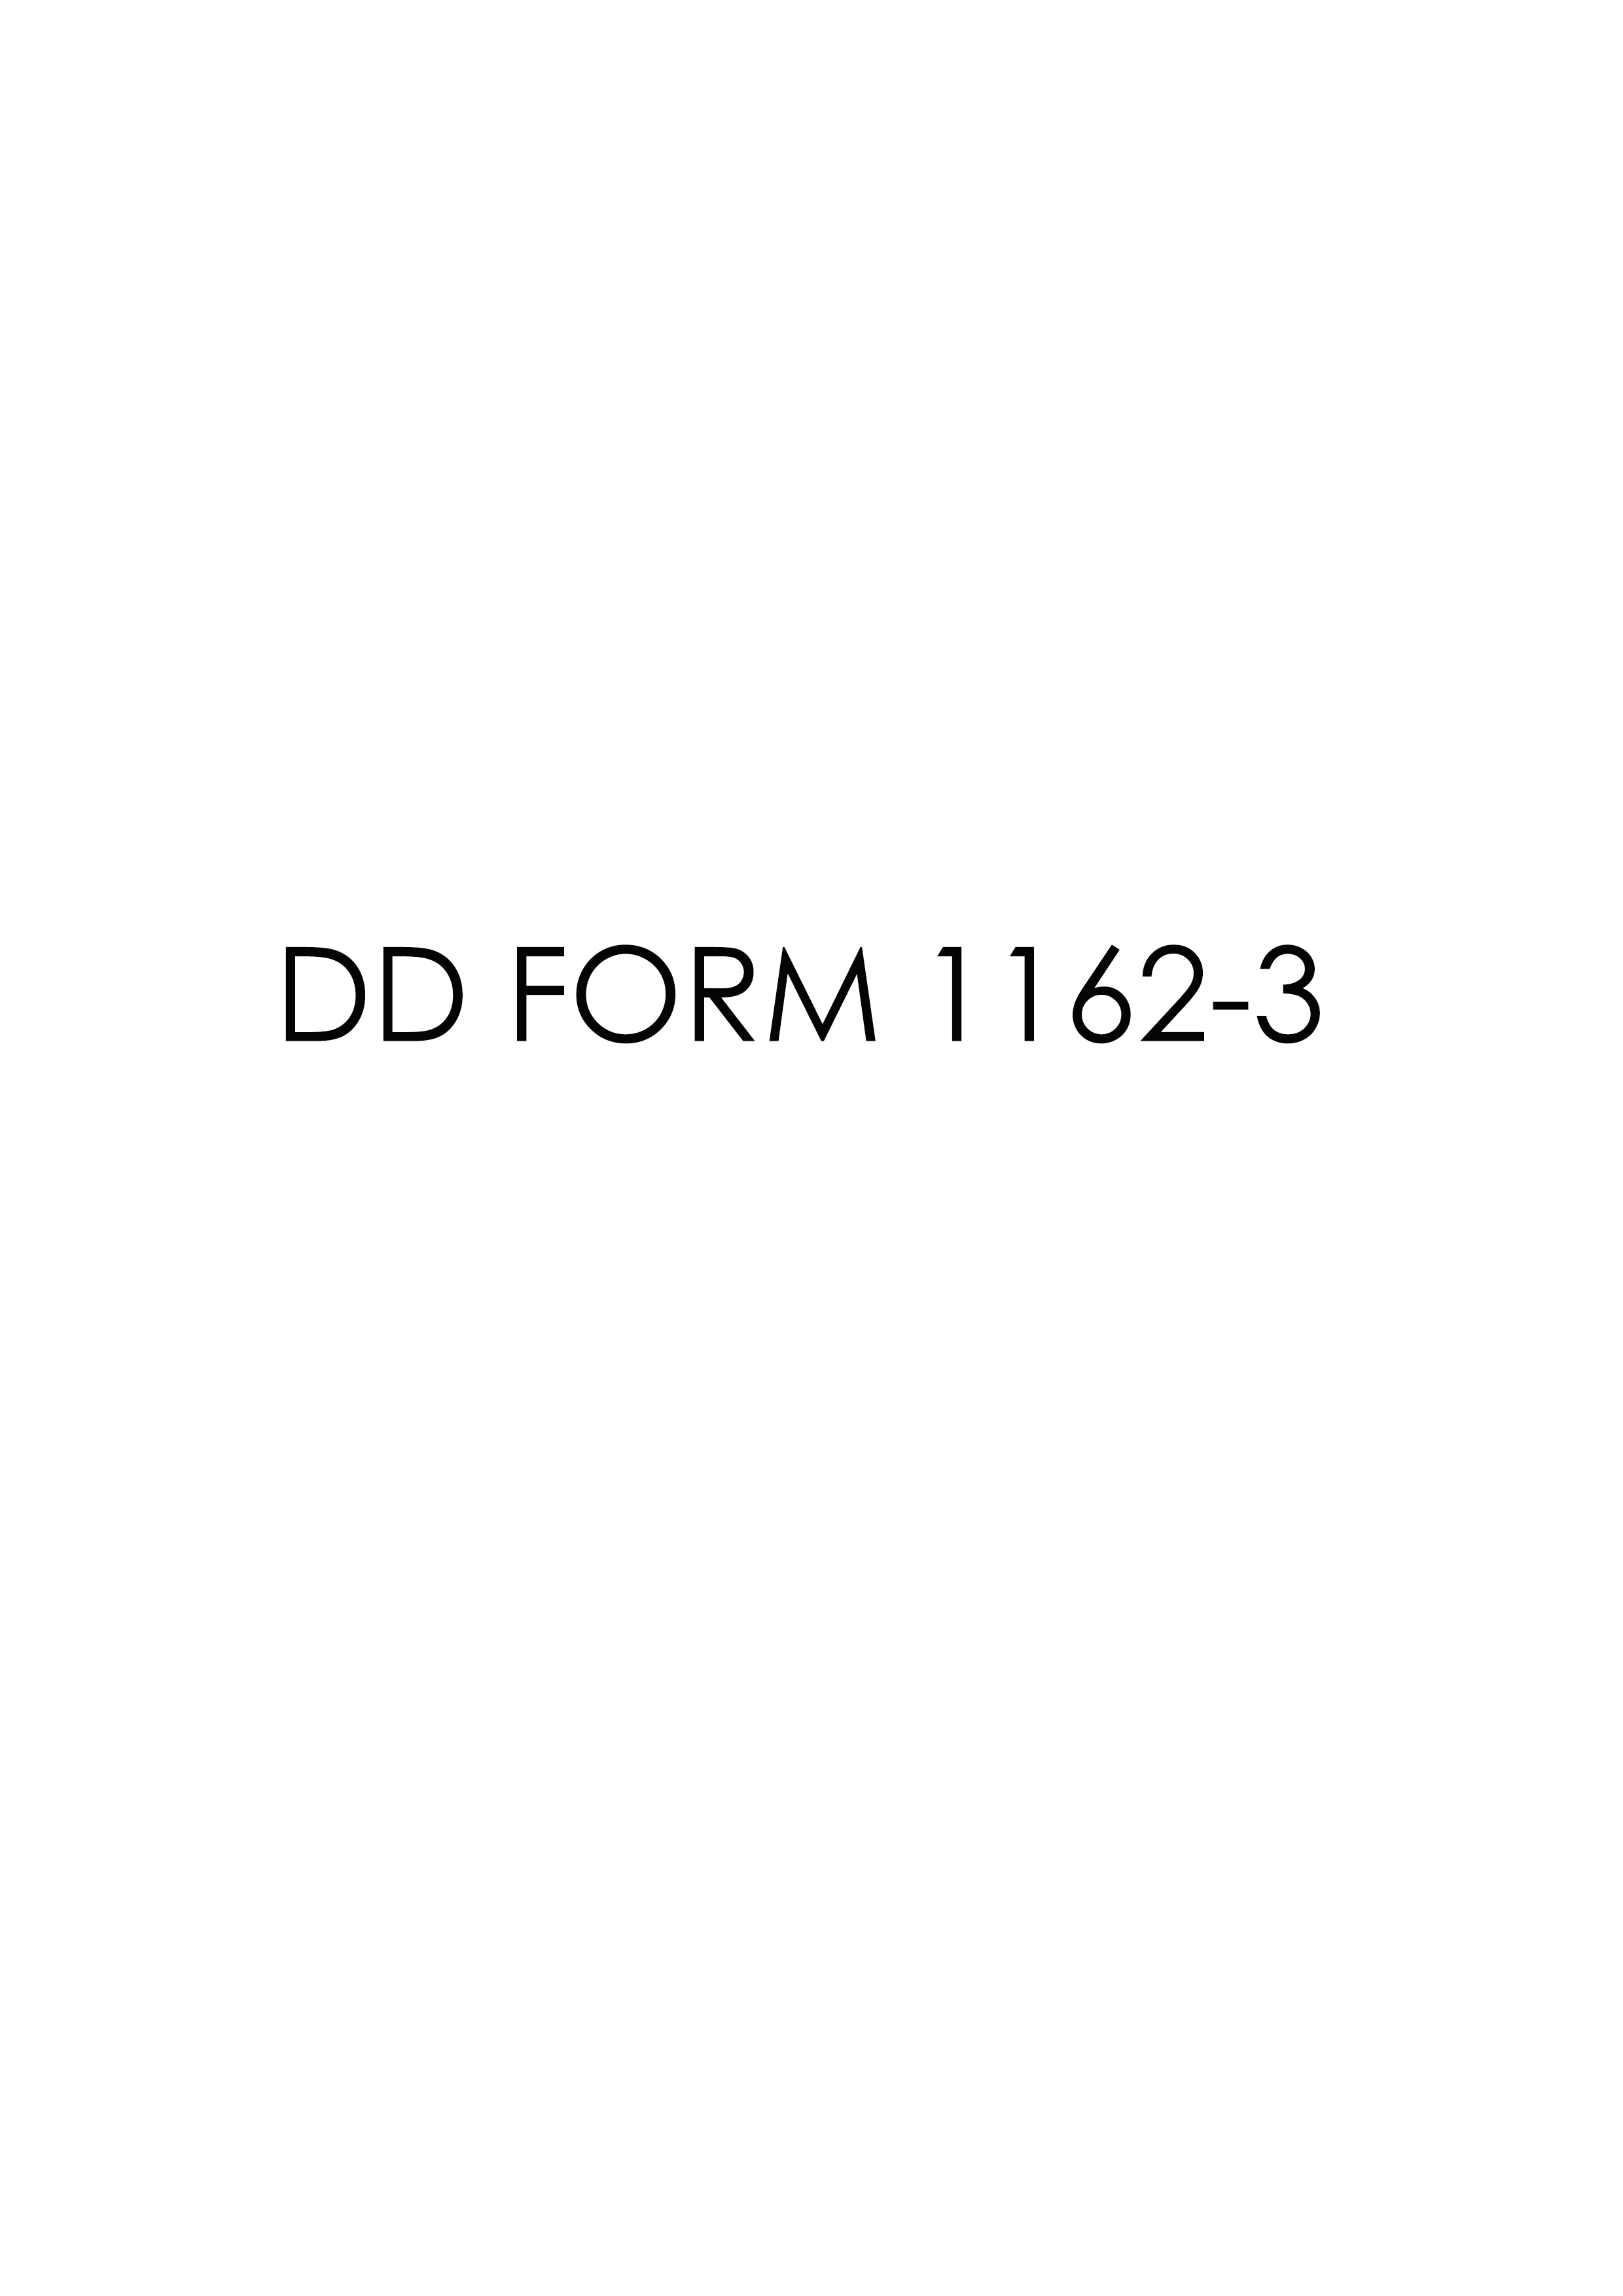 Download dd Form 1162-3